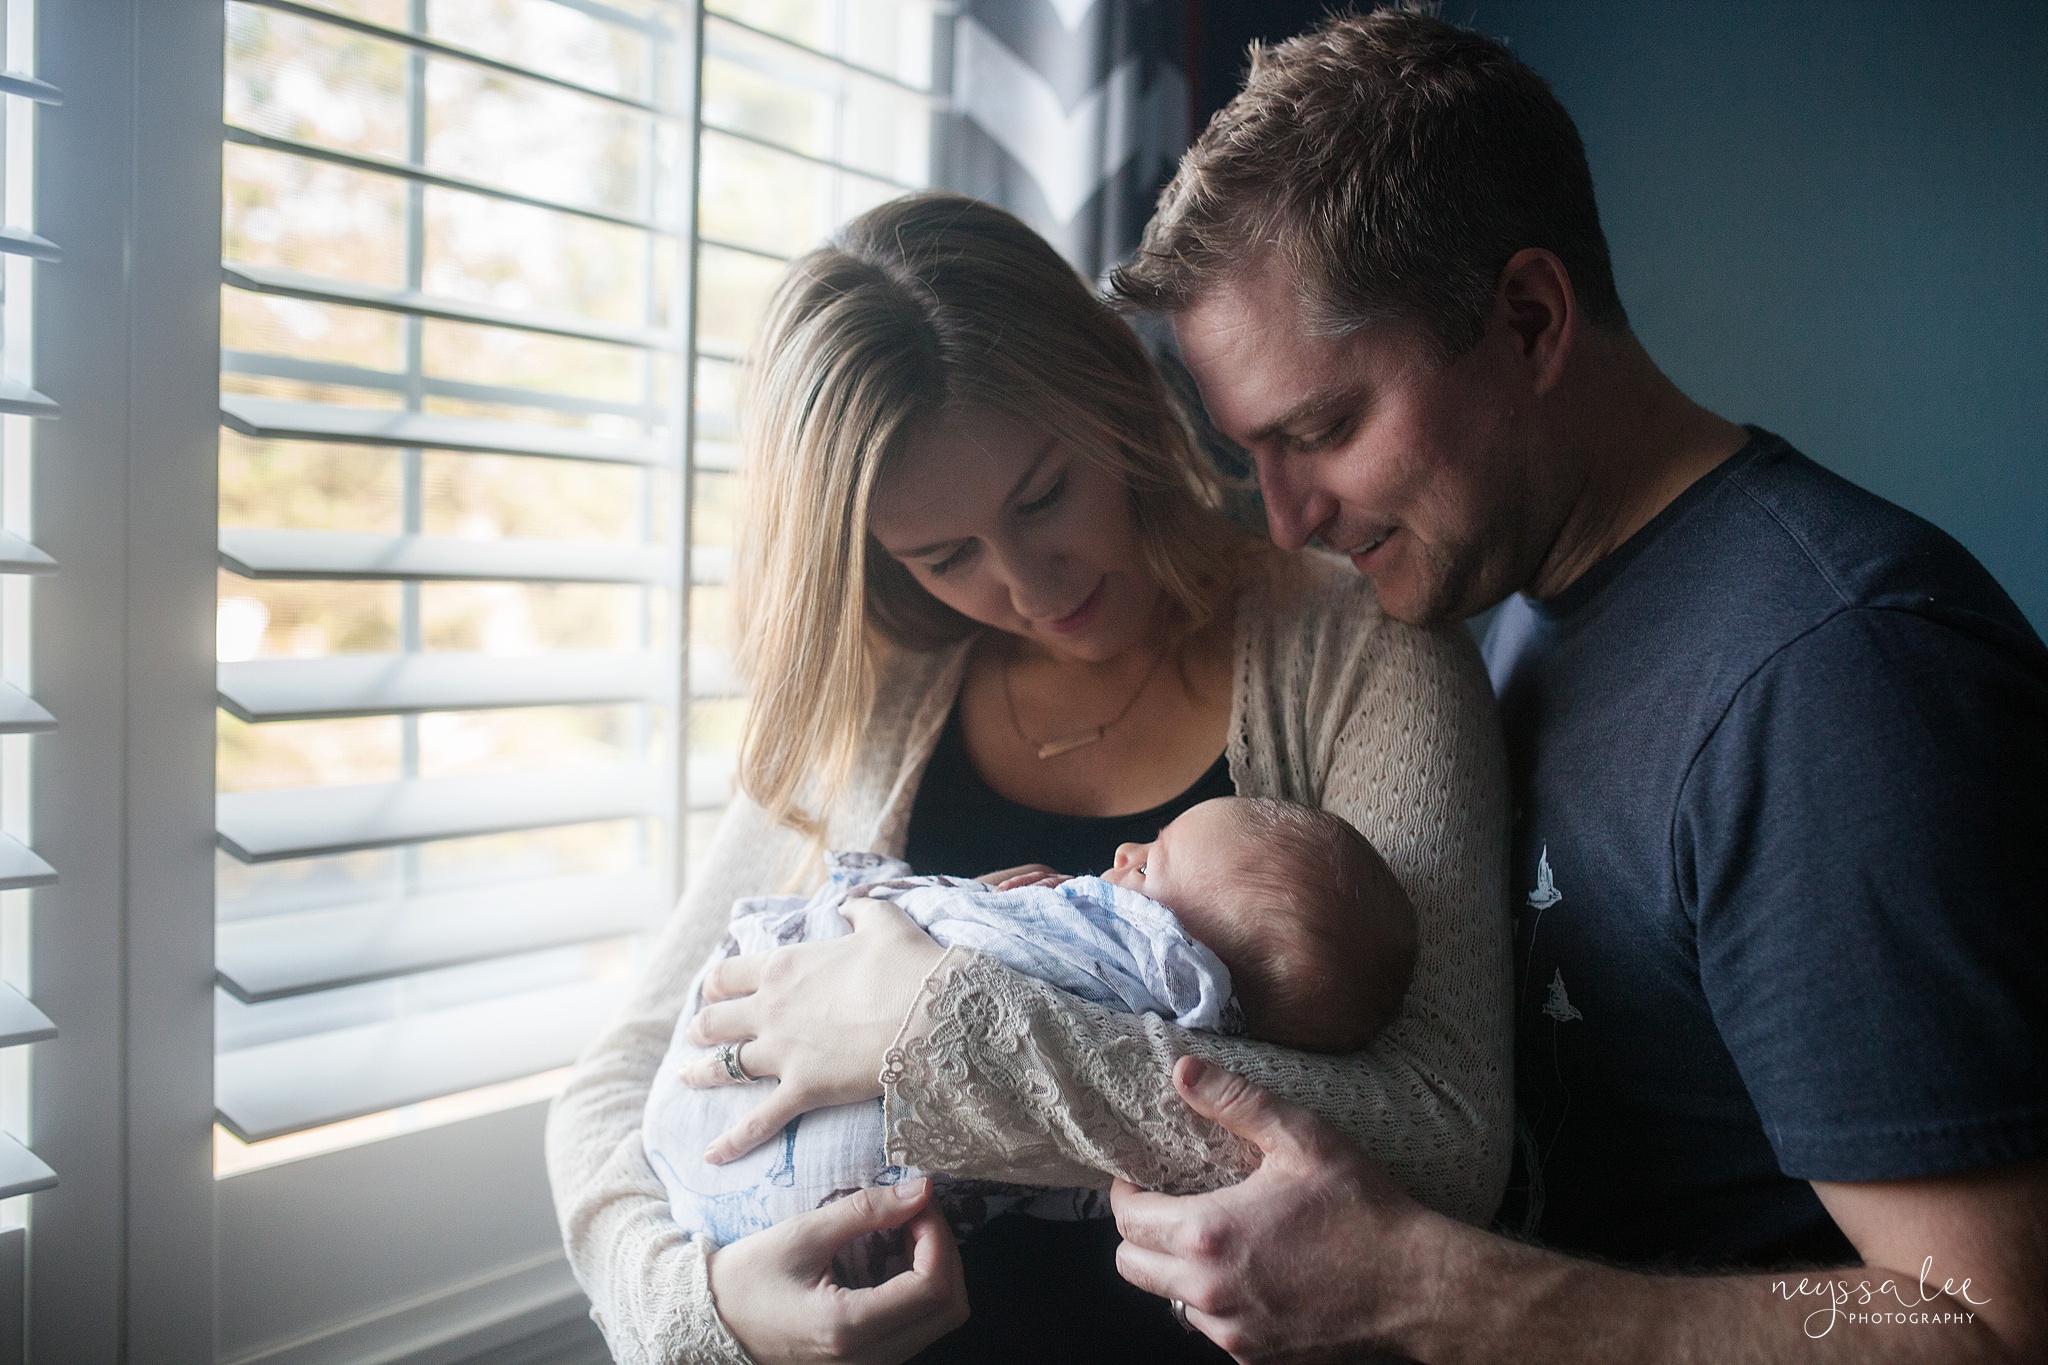 Snoqualmie Newborn Photographer, Neyssa Lee Photography, Family with newborn by window